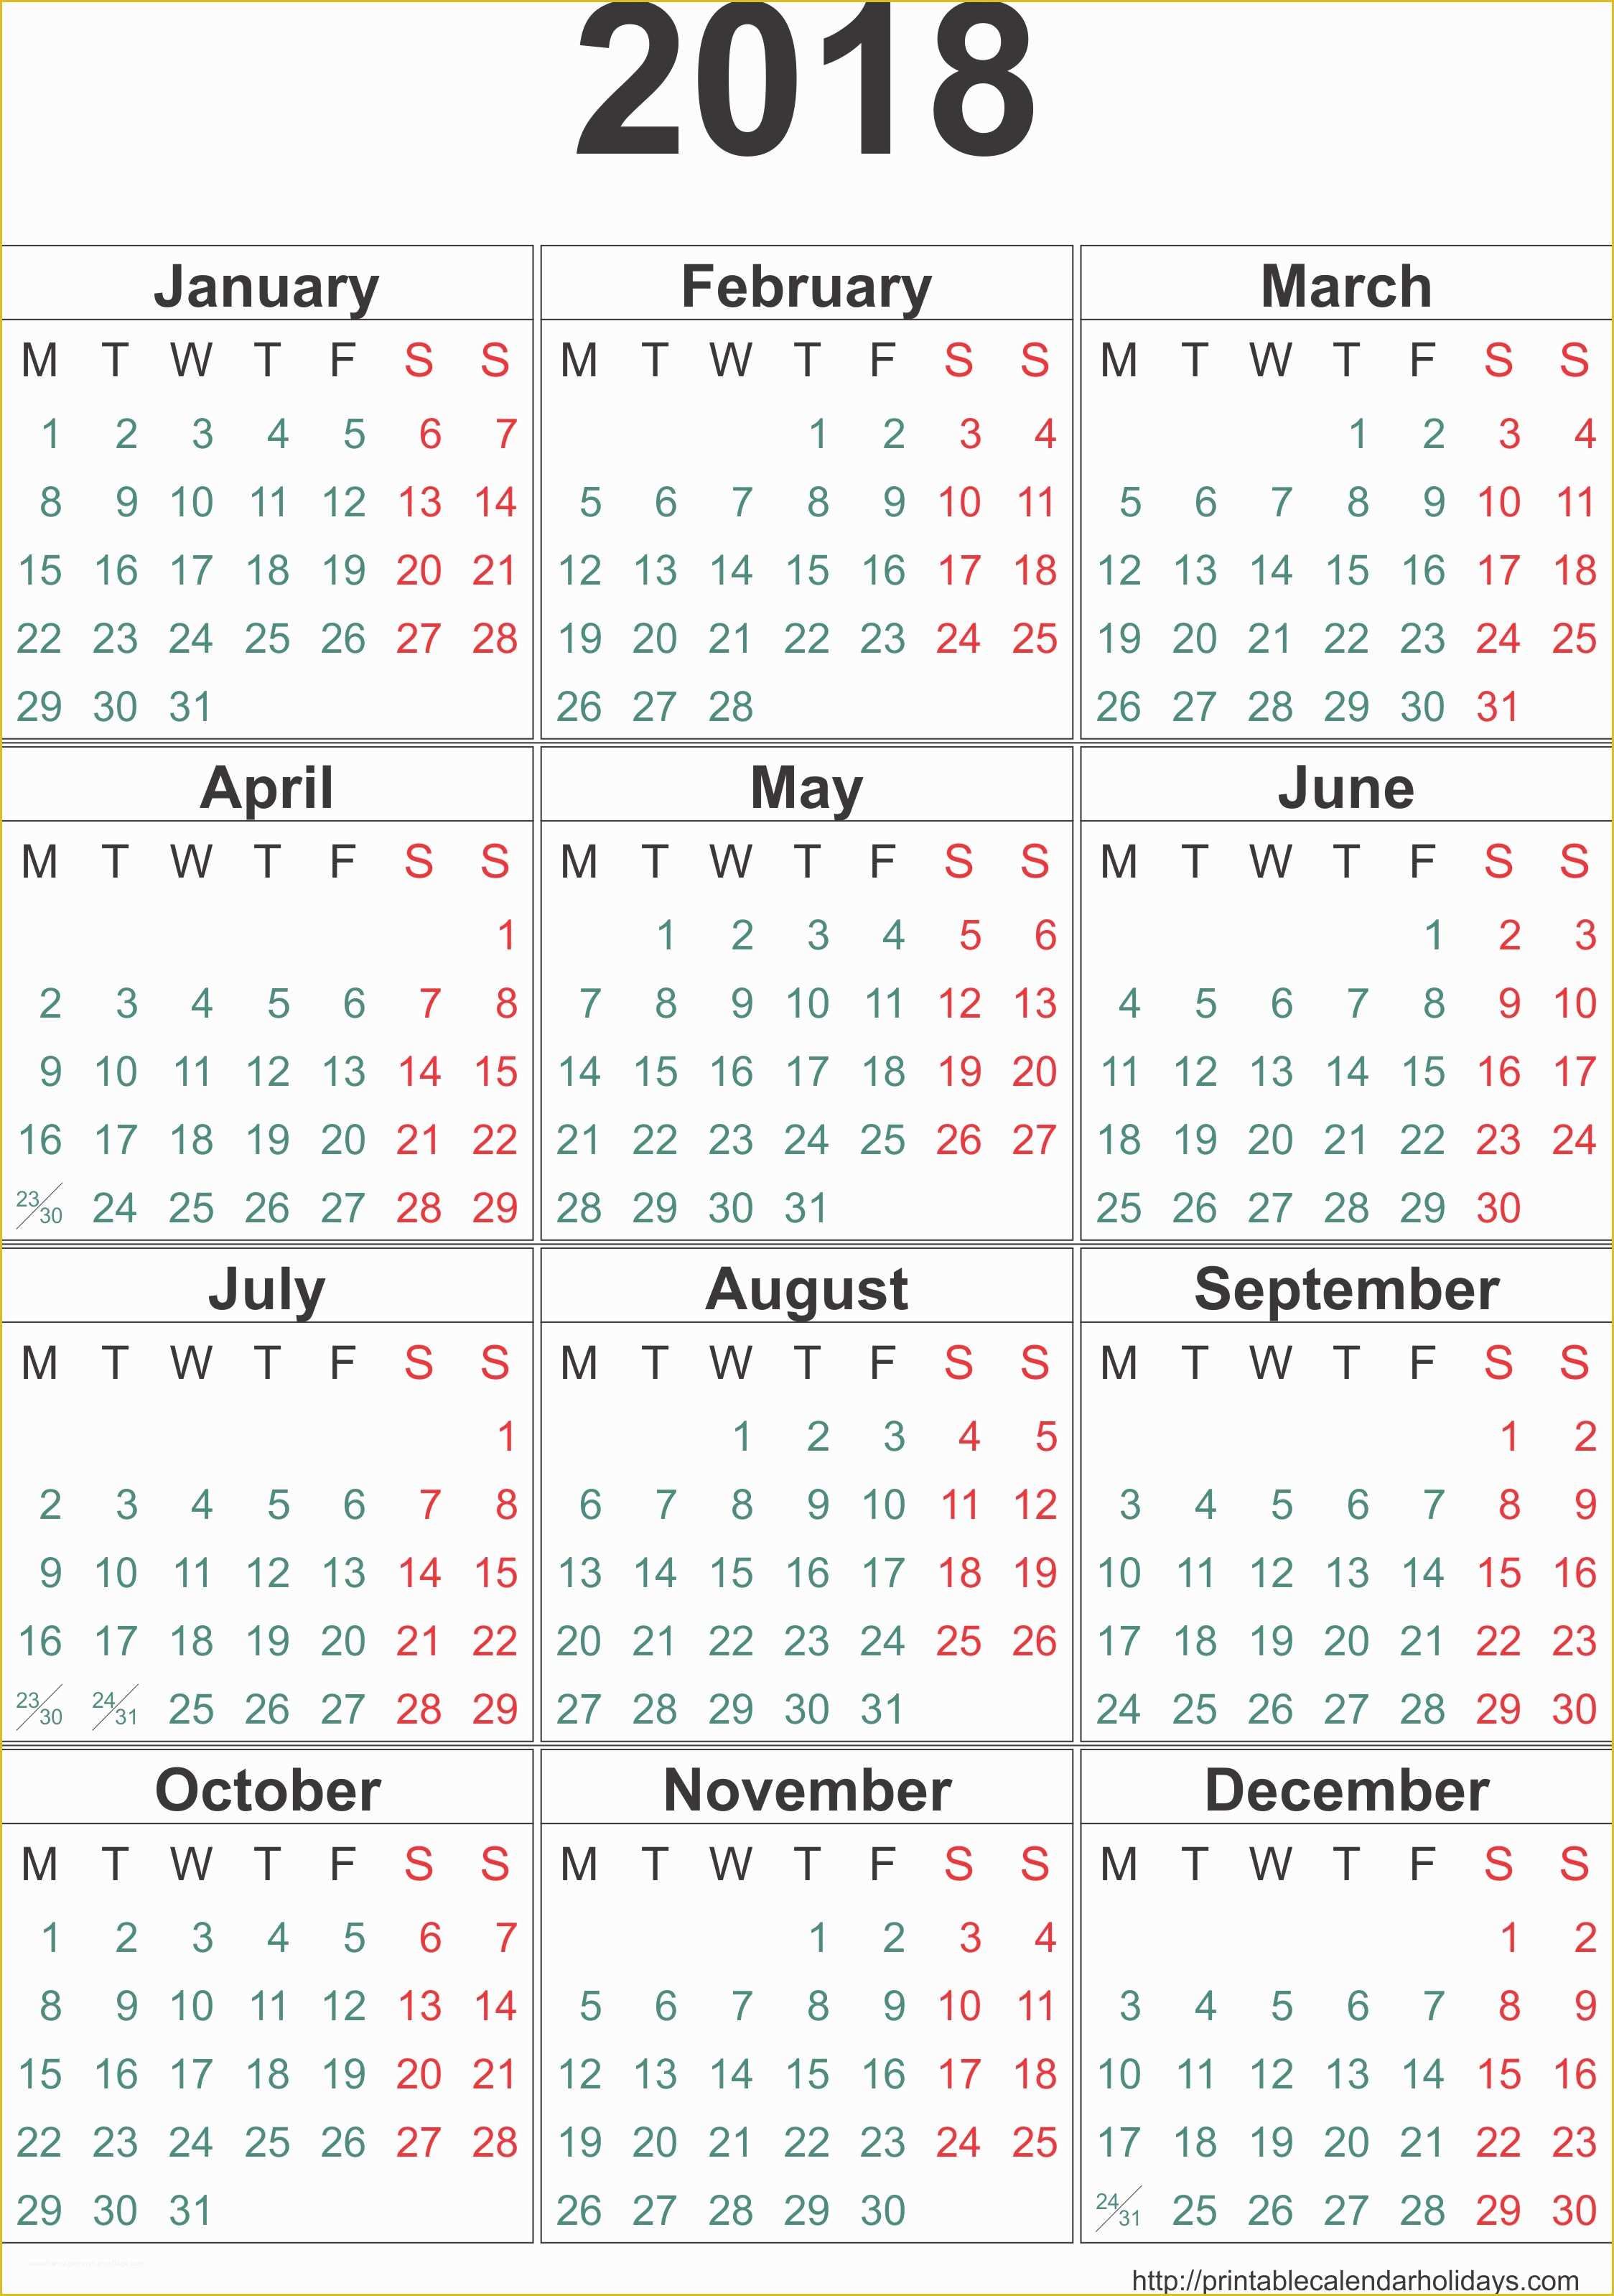 Calendar Template Free 2018 Of Free 2018 Calendar with Holidays